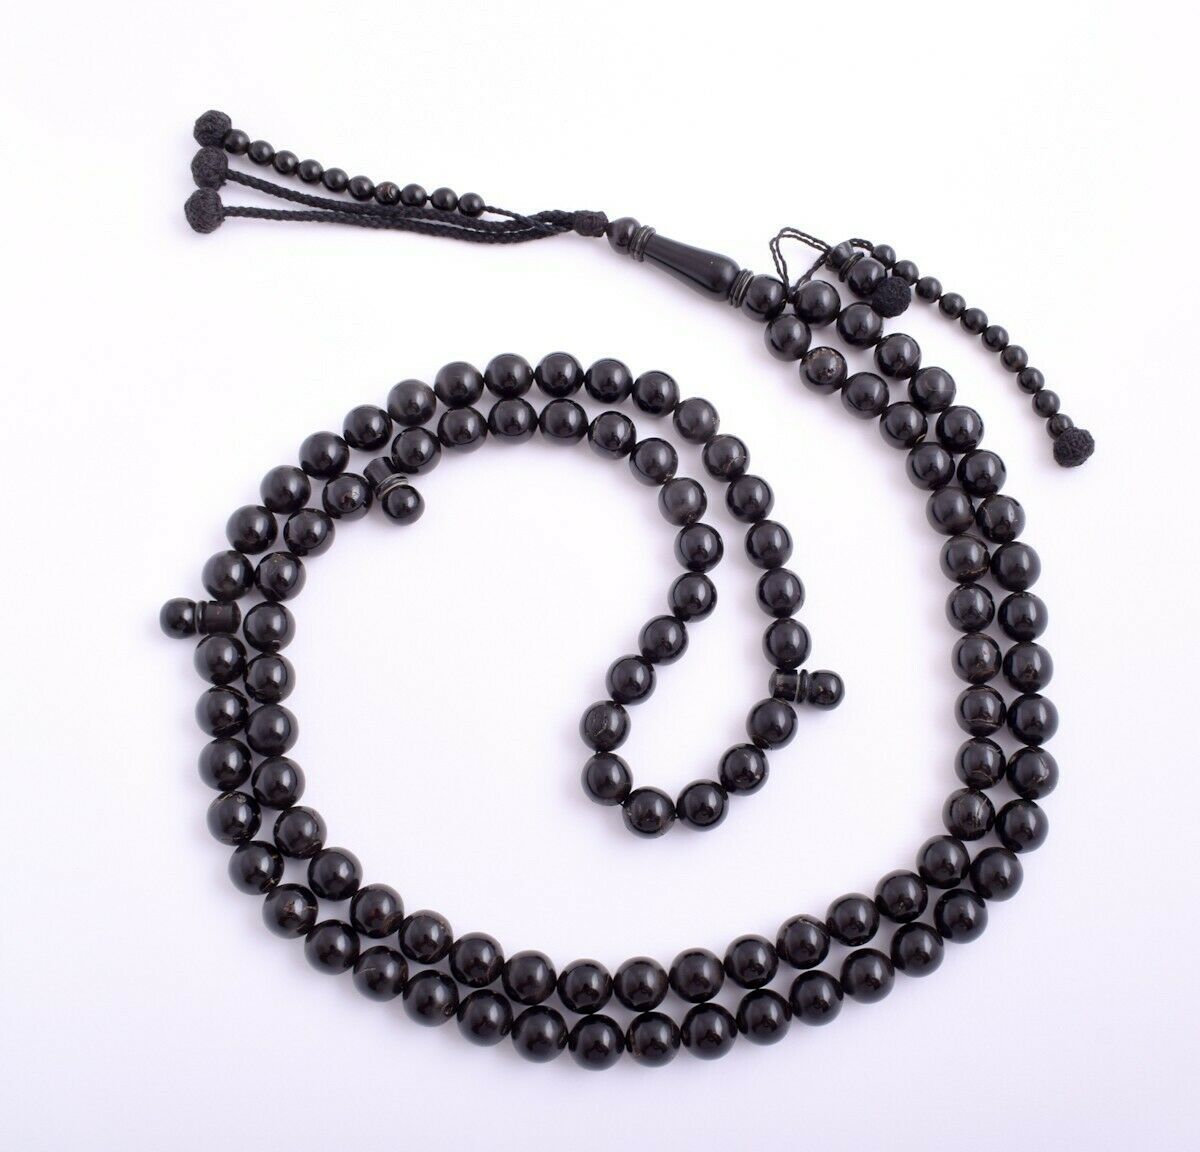 Prayer Beads-Black Coral-Yusr komboloi-Tasbih- Masbaha-Worry Bads-100 ...